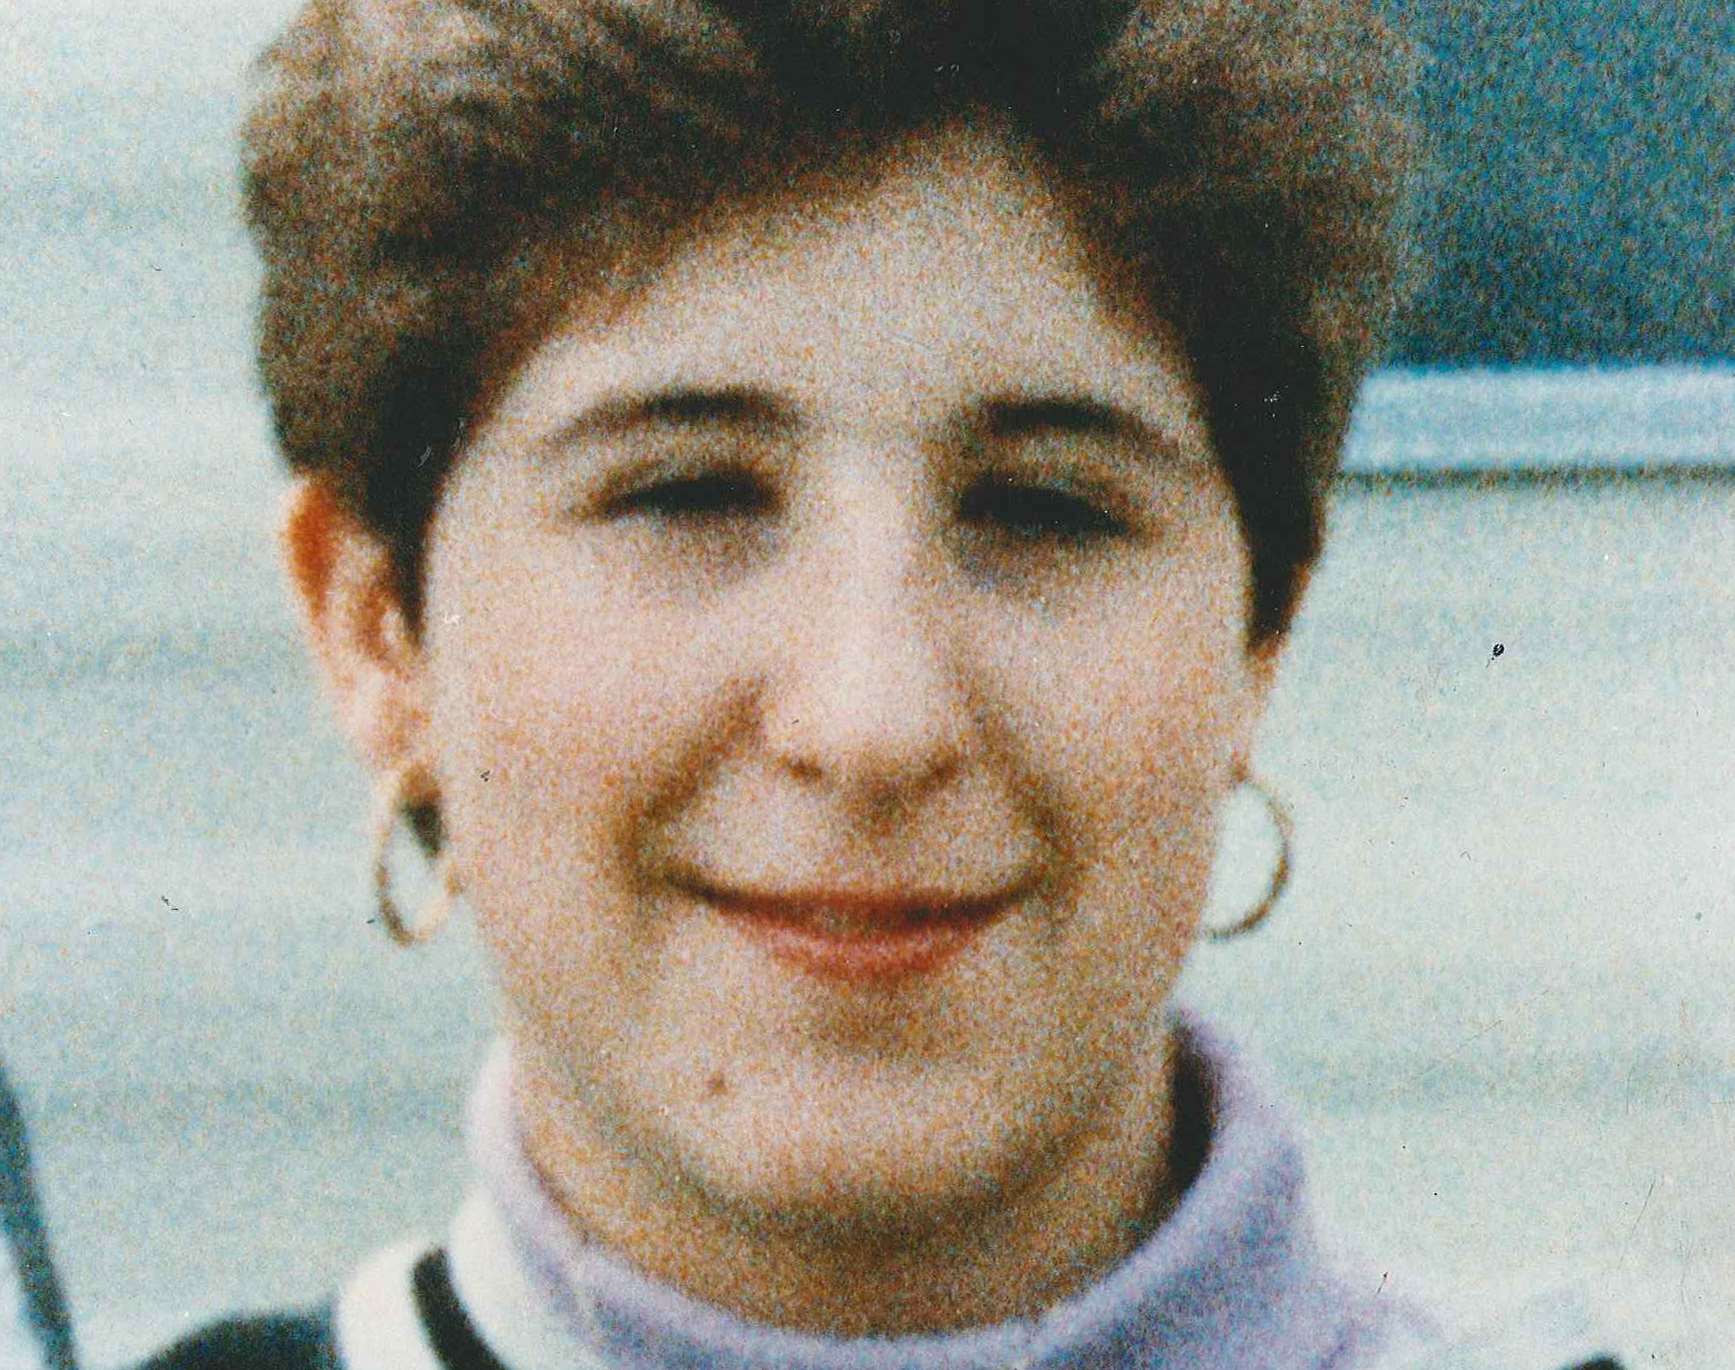 Claire Tiltman was murdered in 1993